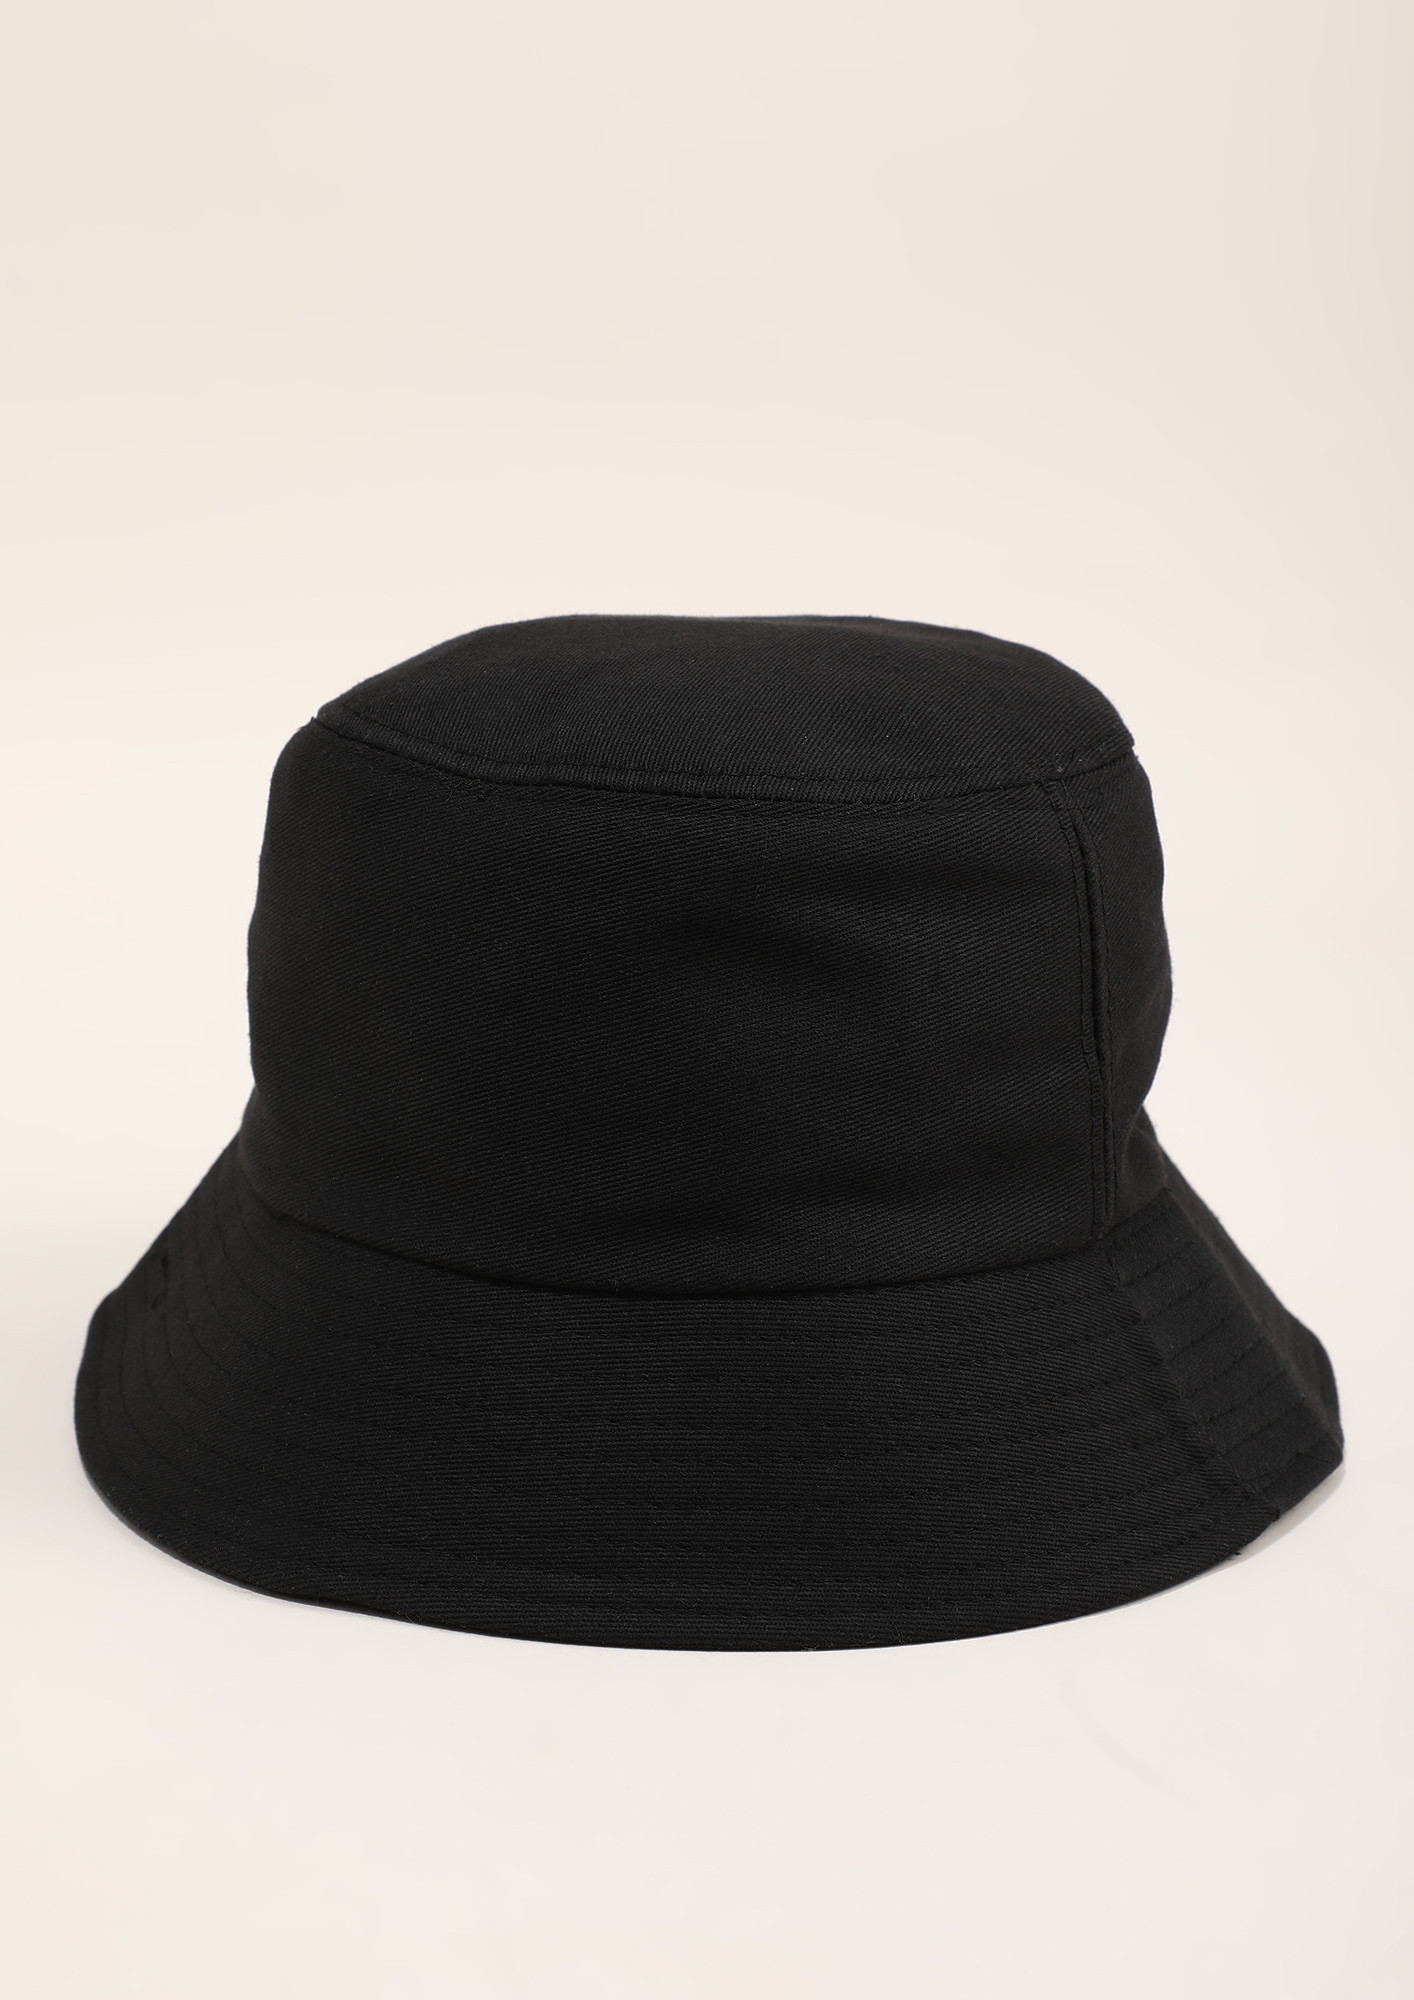 My Basics Black Bucket Hat